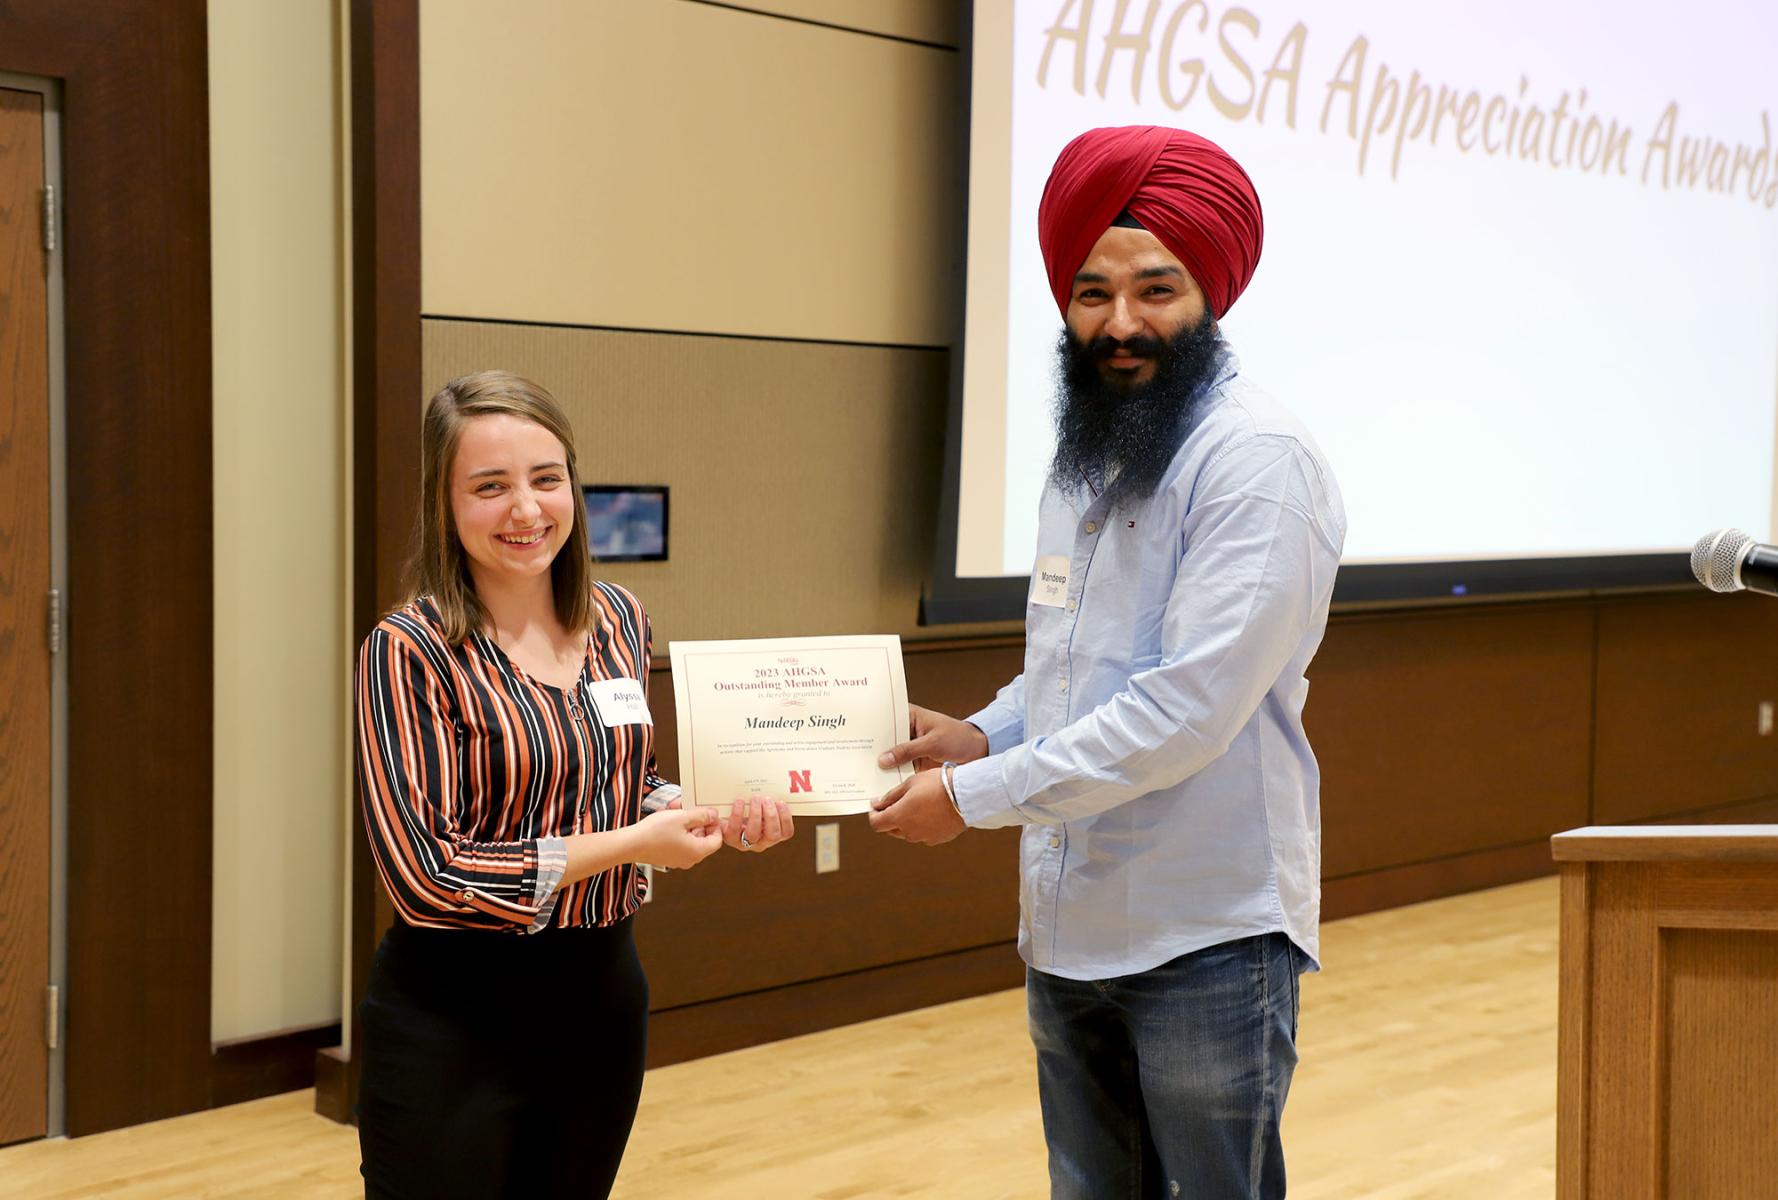 Outstanding AHGSA Award to Mandeep Singh 